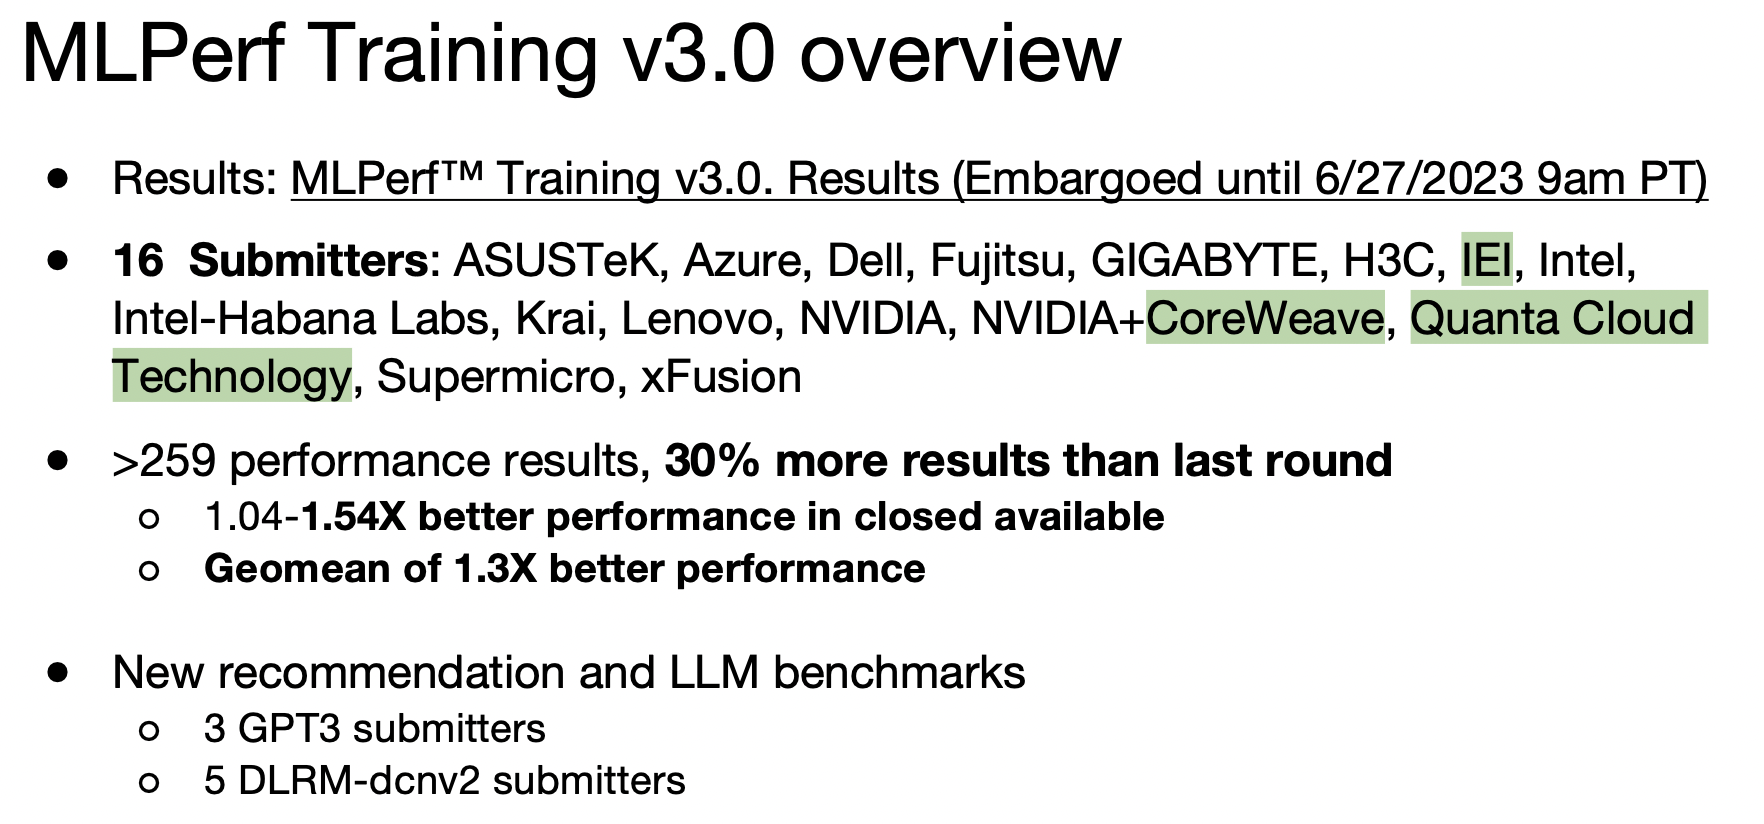 MLPerf Training 3.0 Showcases LLM; Nvidia Dominates, Intel/Habana